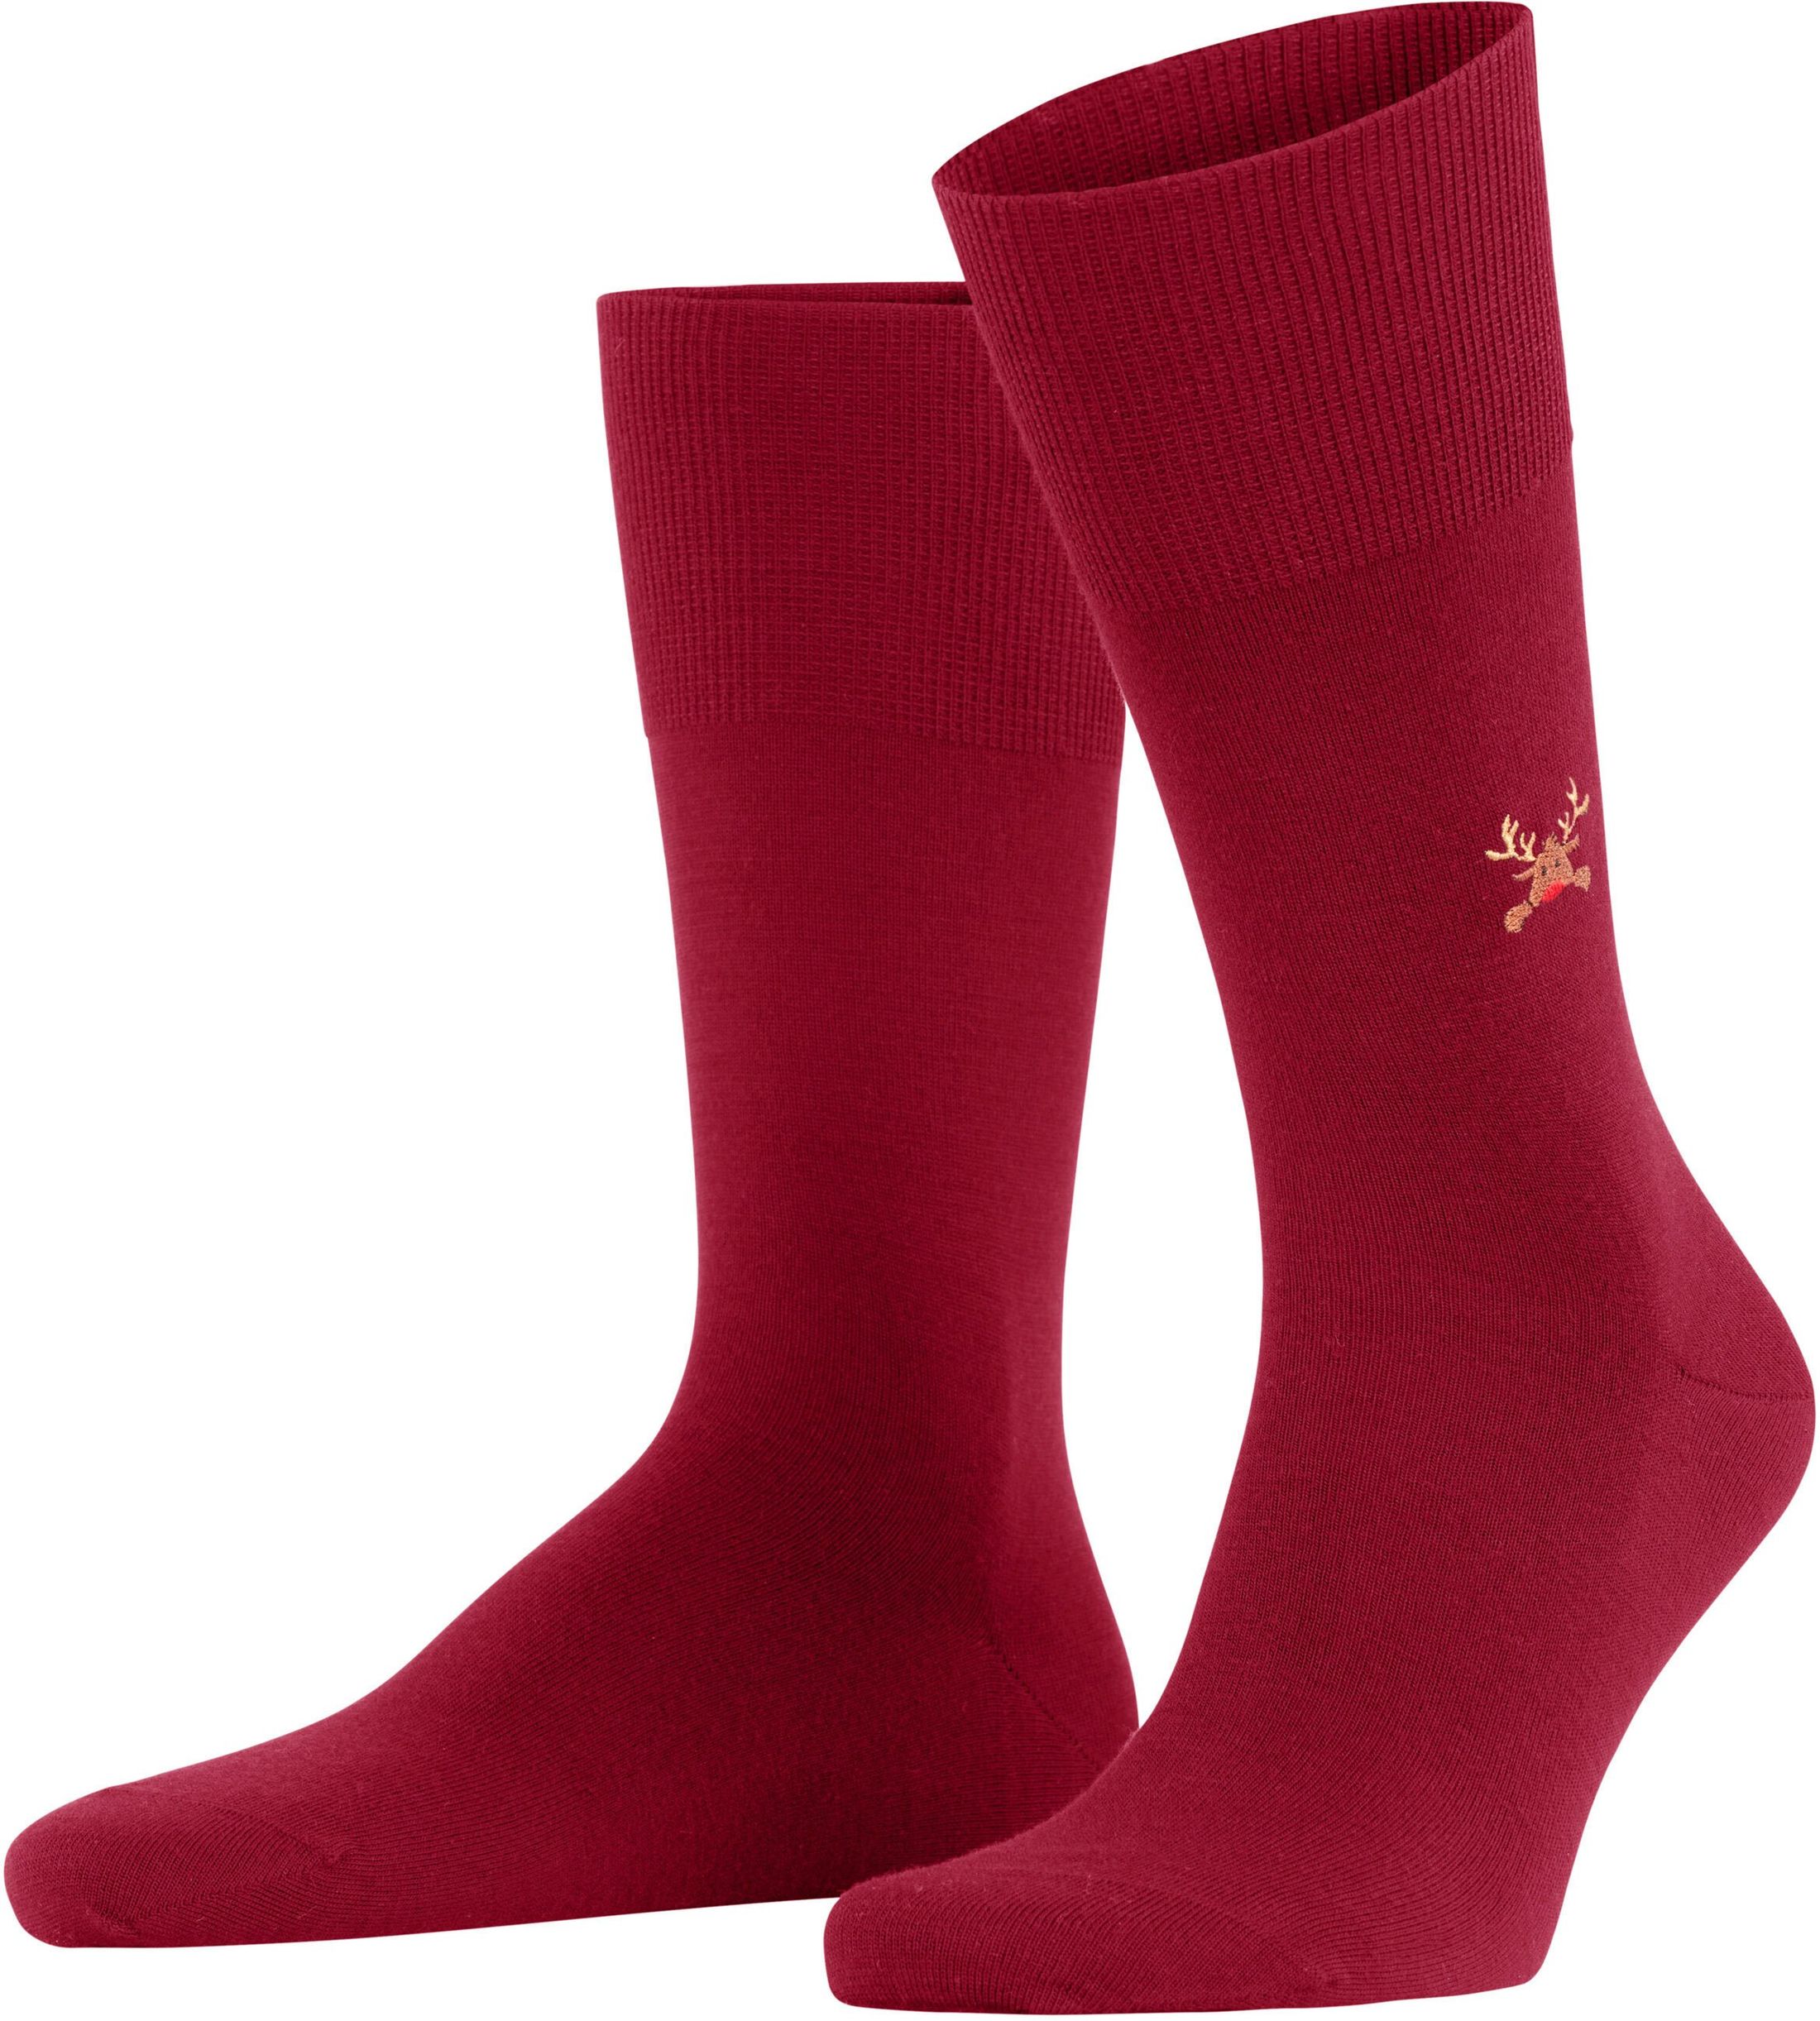 Falke Airport Socks Rudolph Red size 41-42